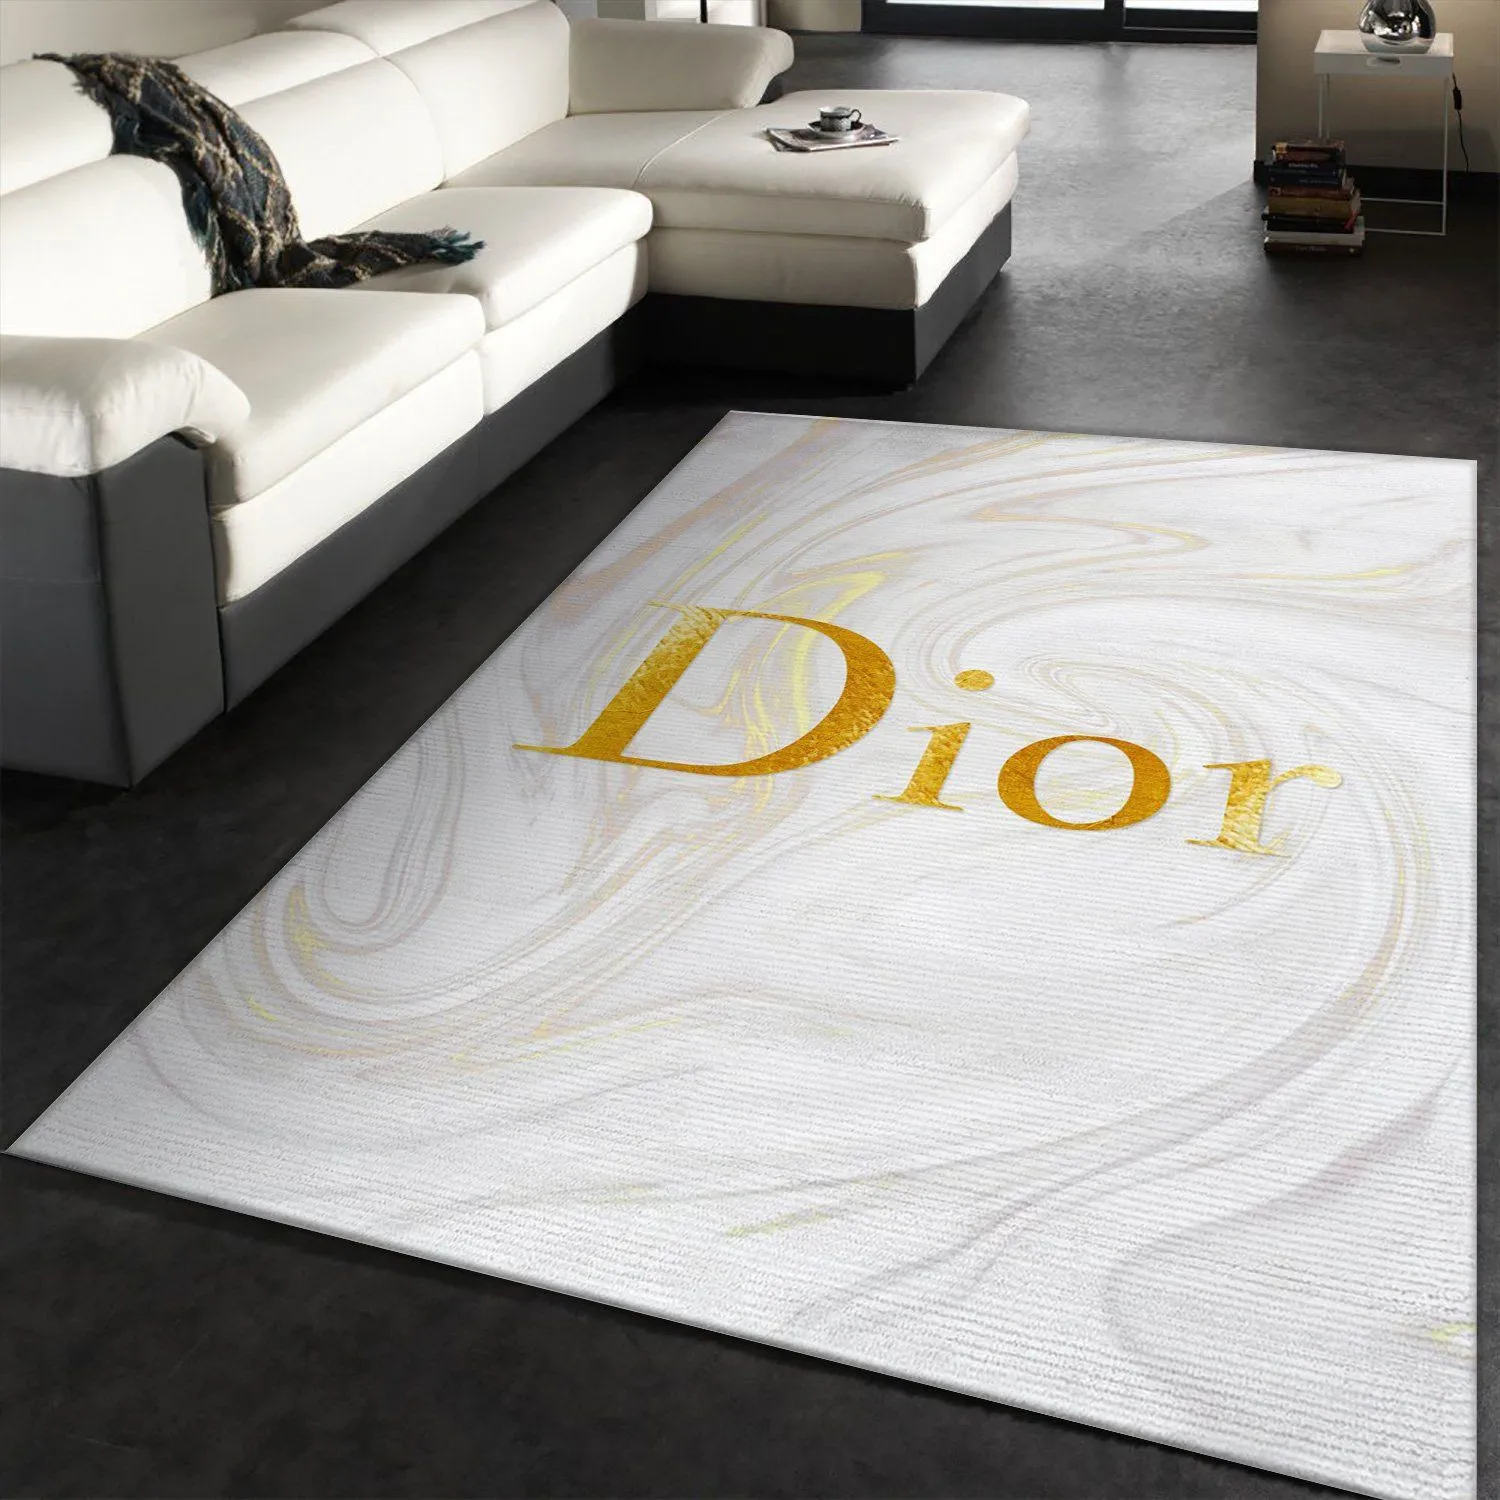 Dior Rectangle Rug Home Decor Door Mat Luxury Area Carpet Fashion Brand